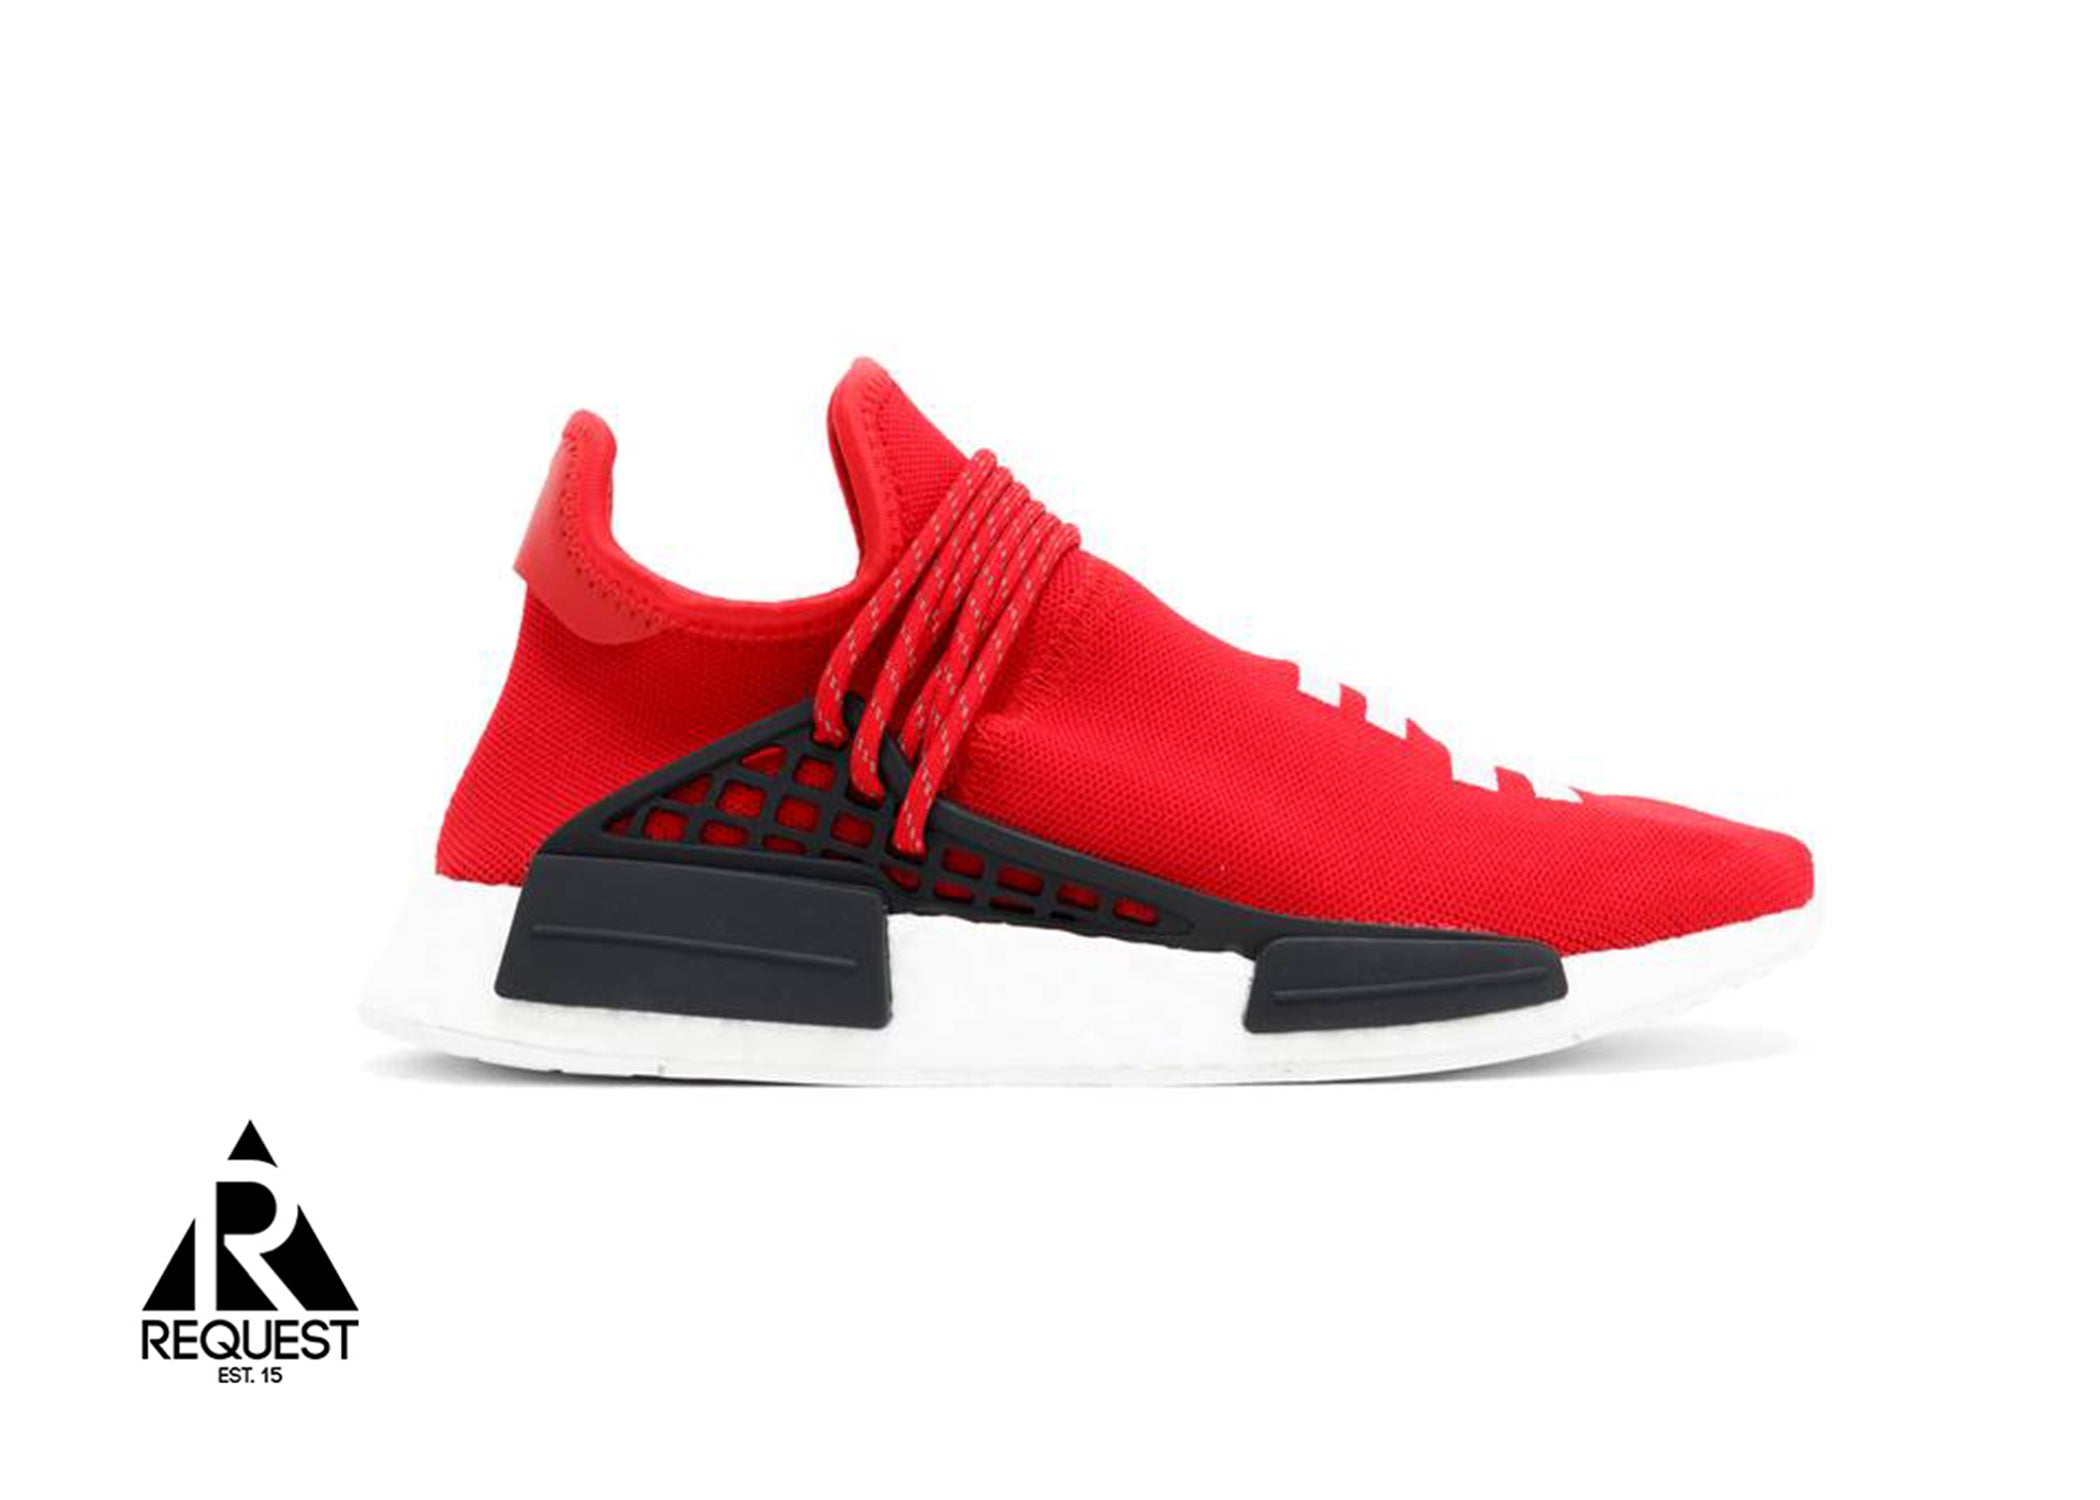 Adidas Human Race “Scarlet”